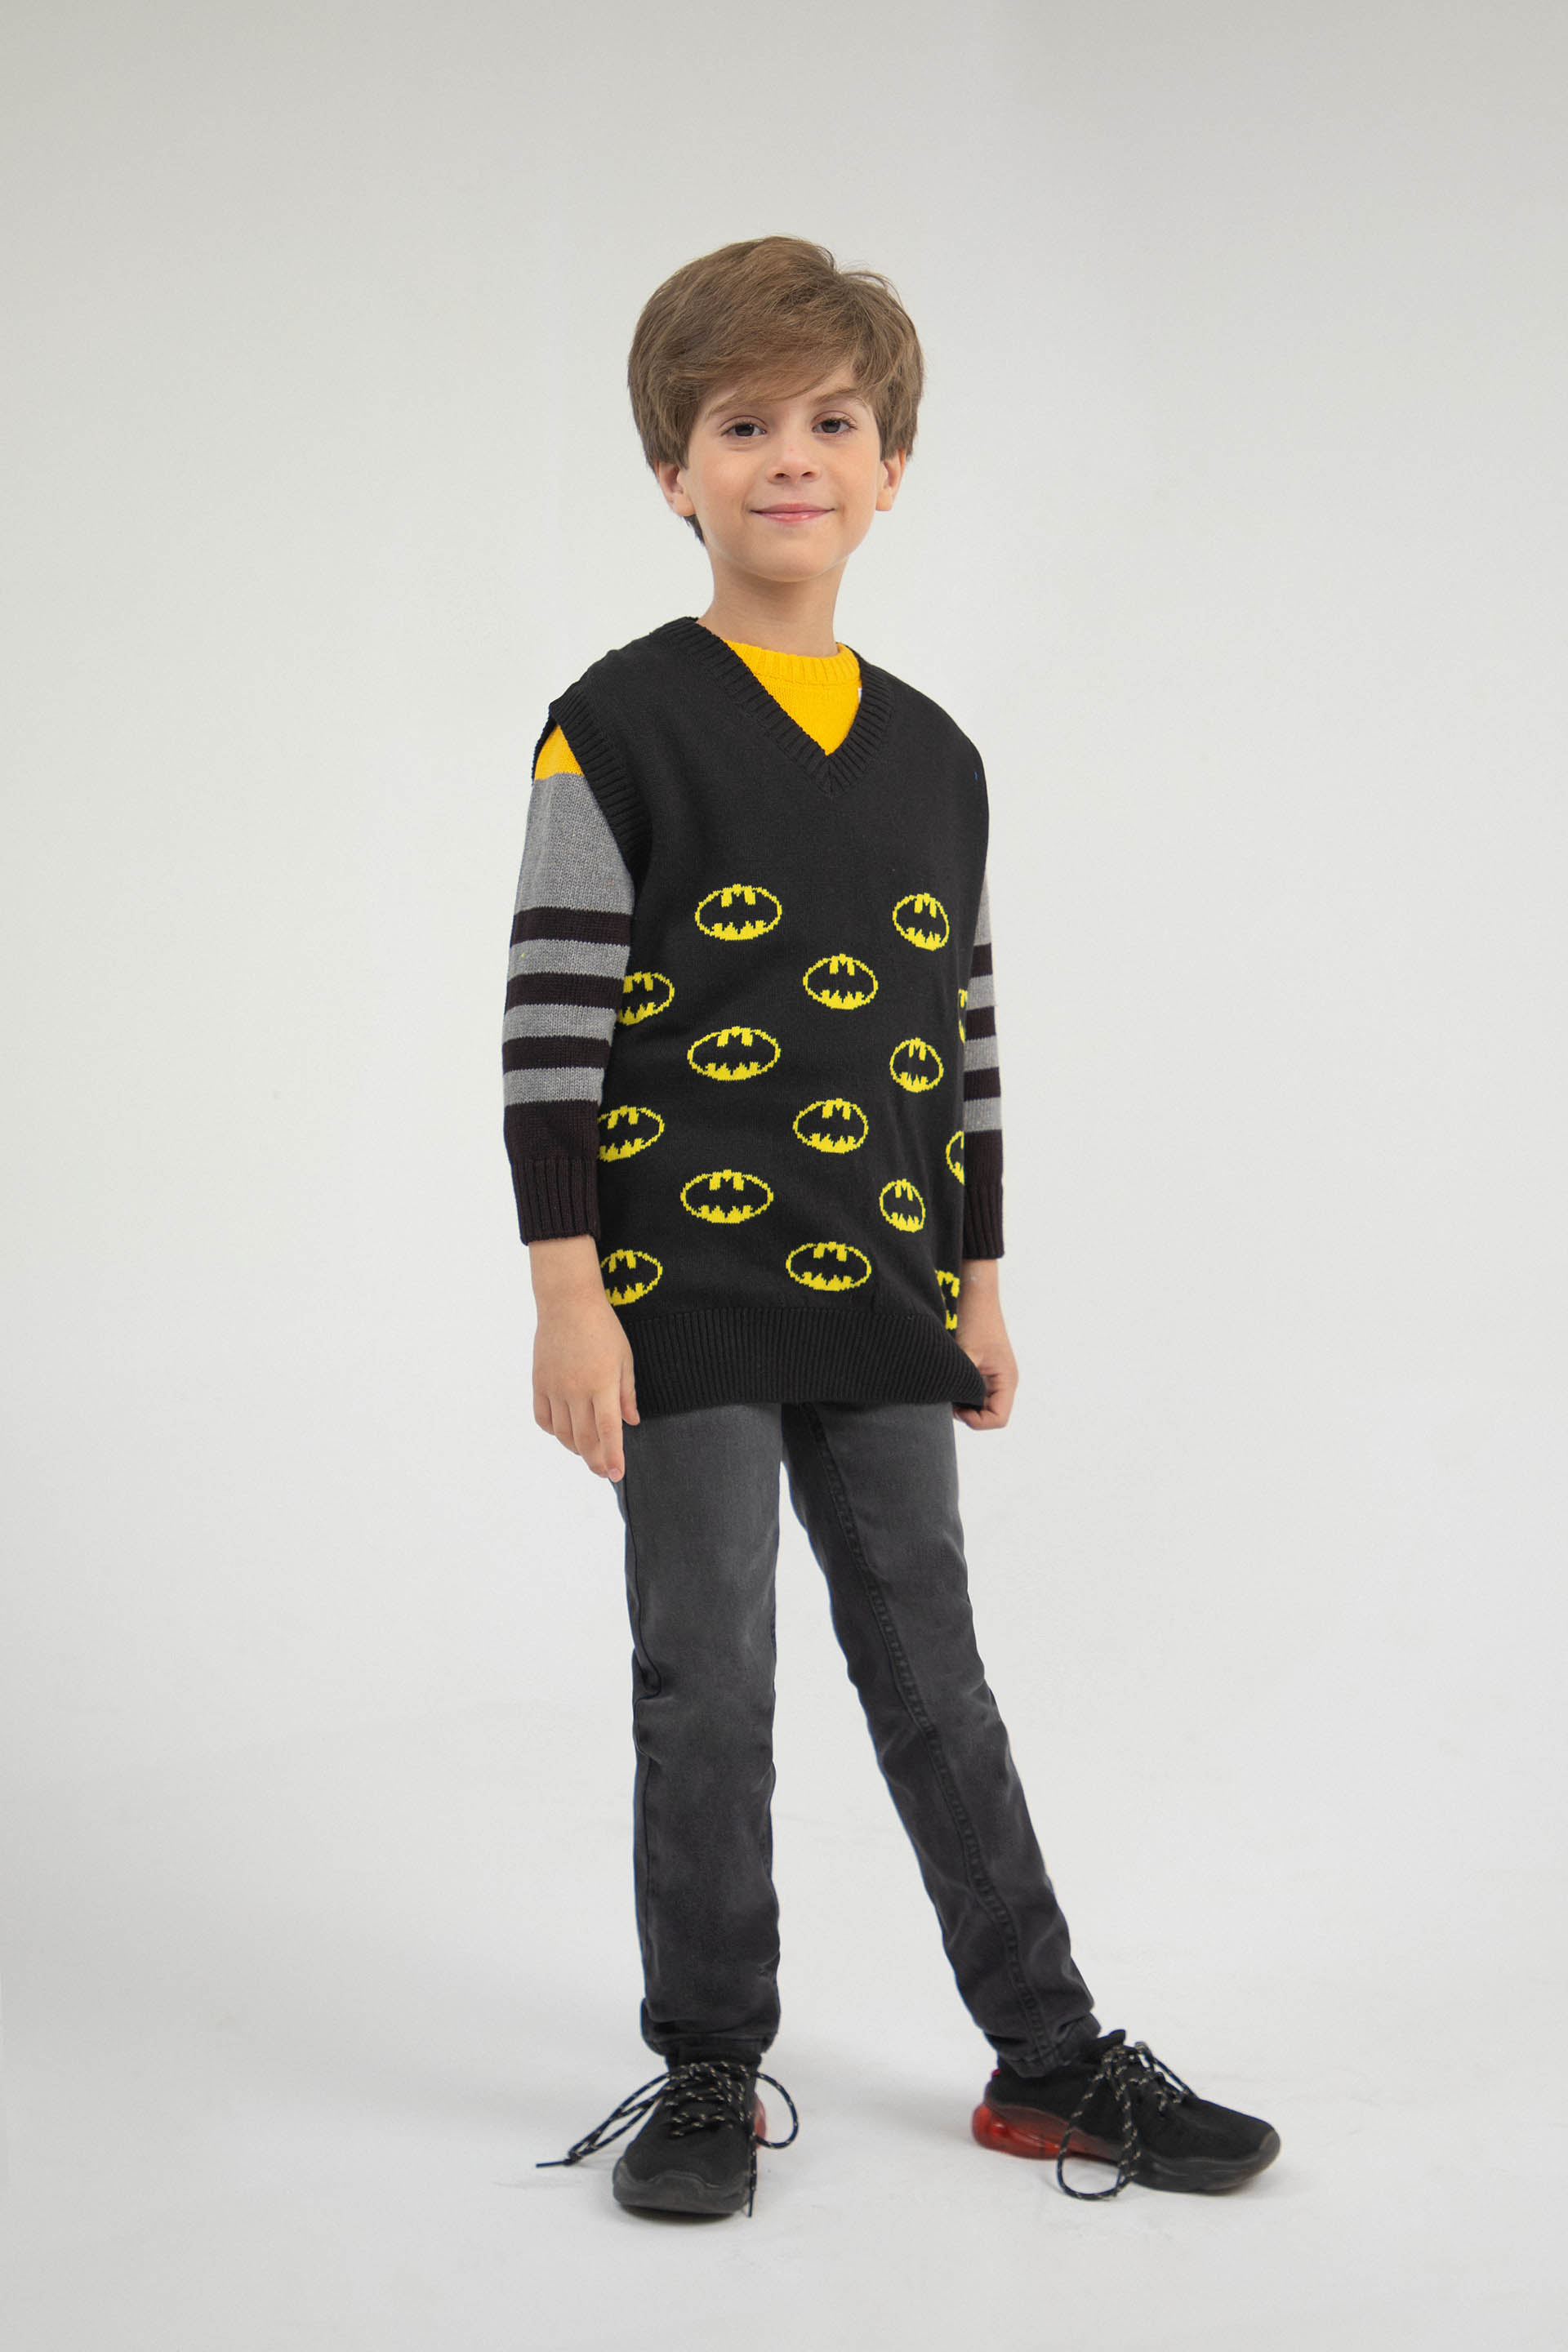 Batman Sweater Black